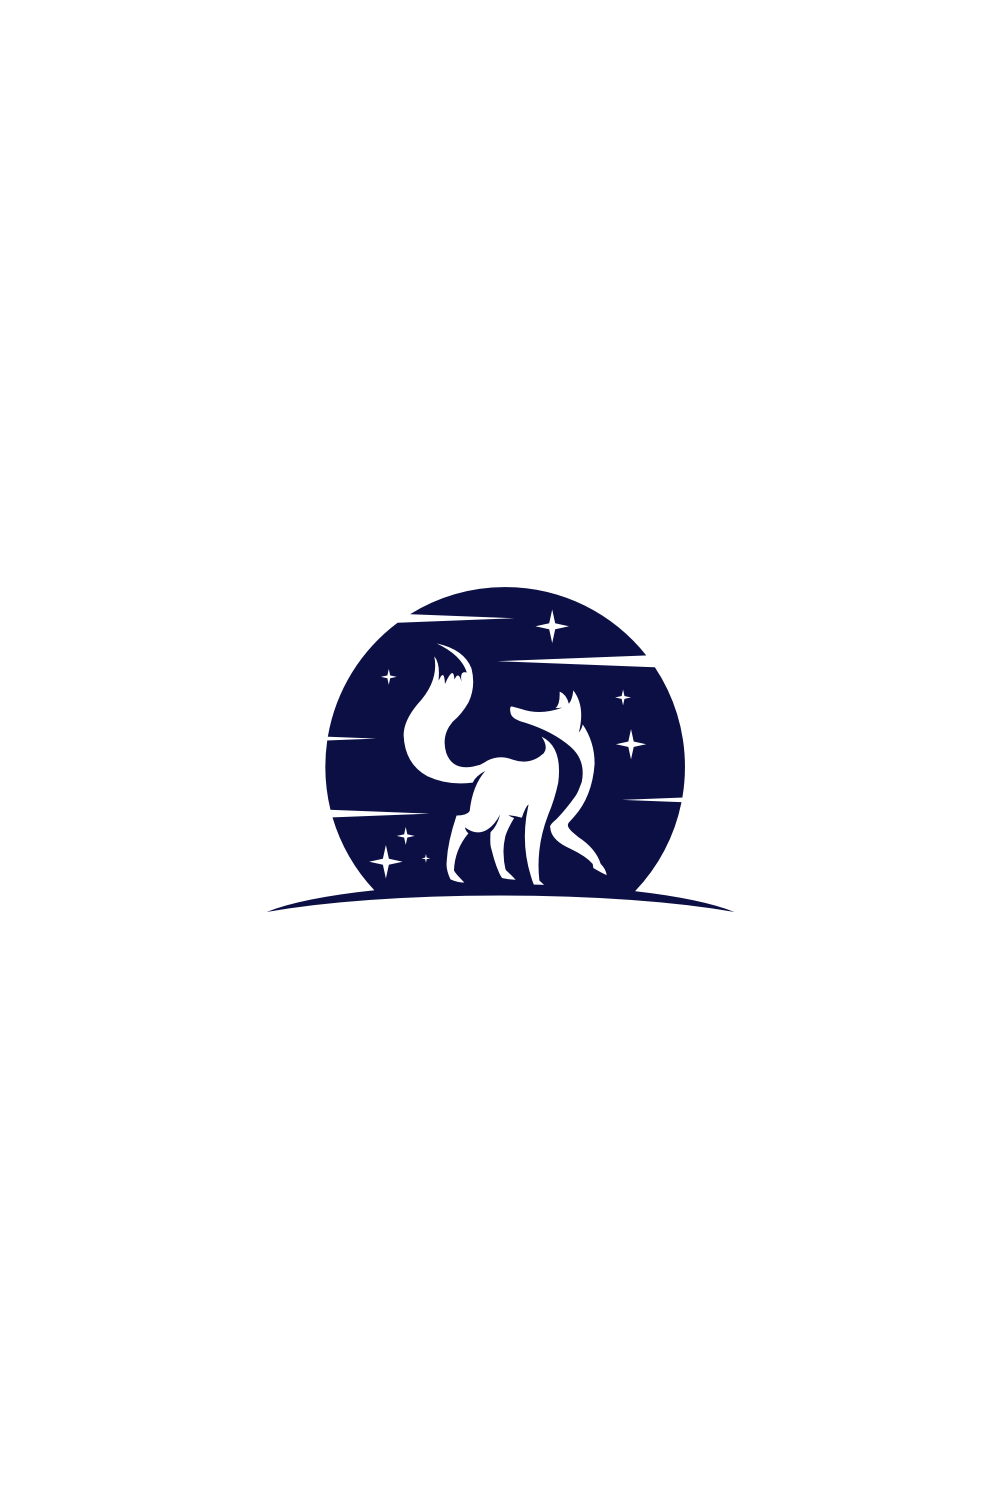 Creative Wolf at Night Logo Design Concepts Premium Vector pinterest image.